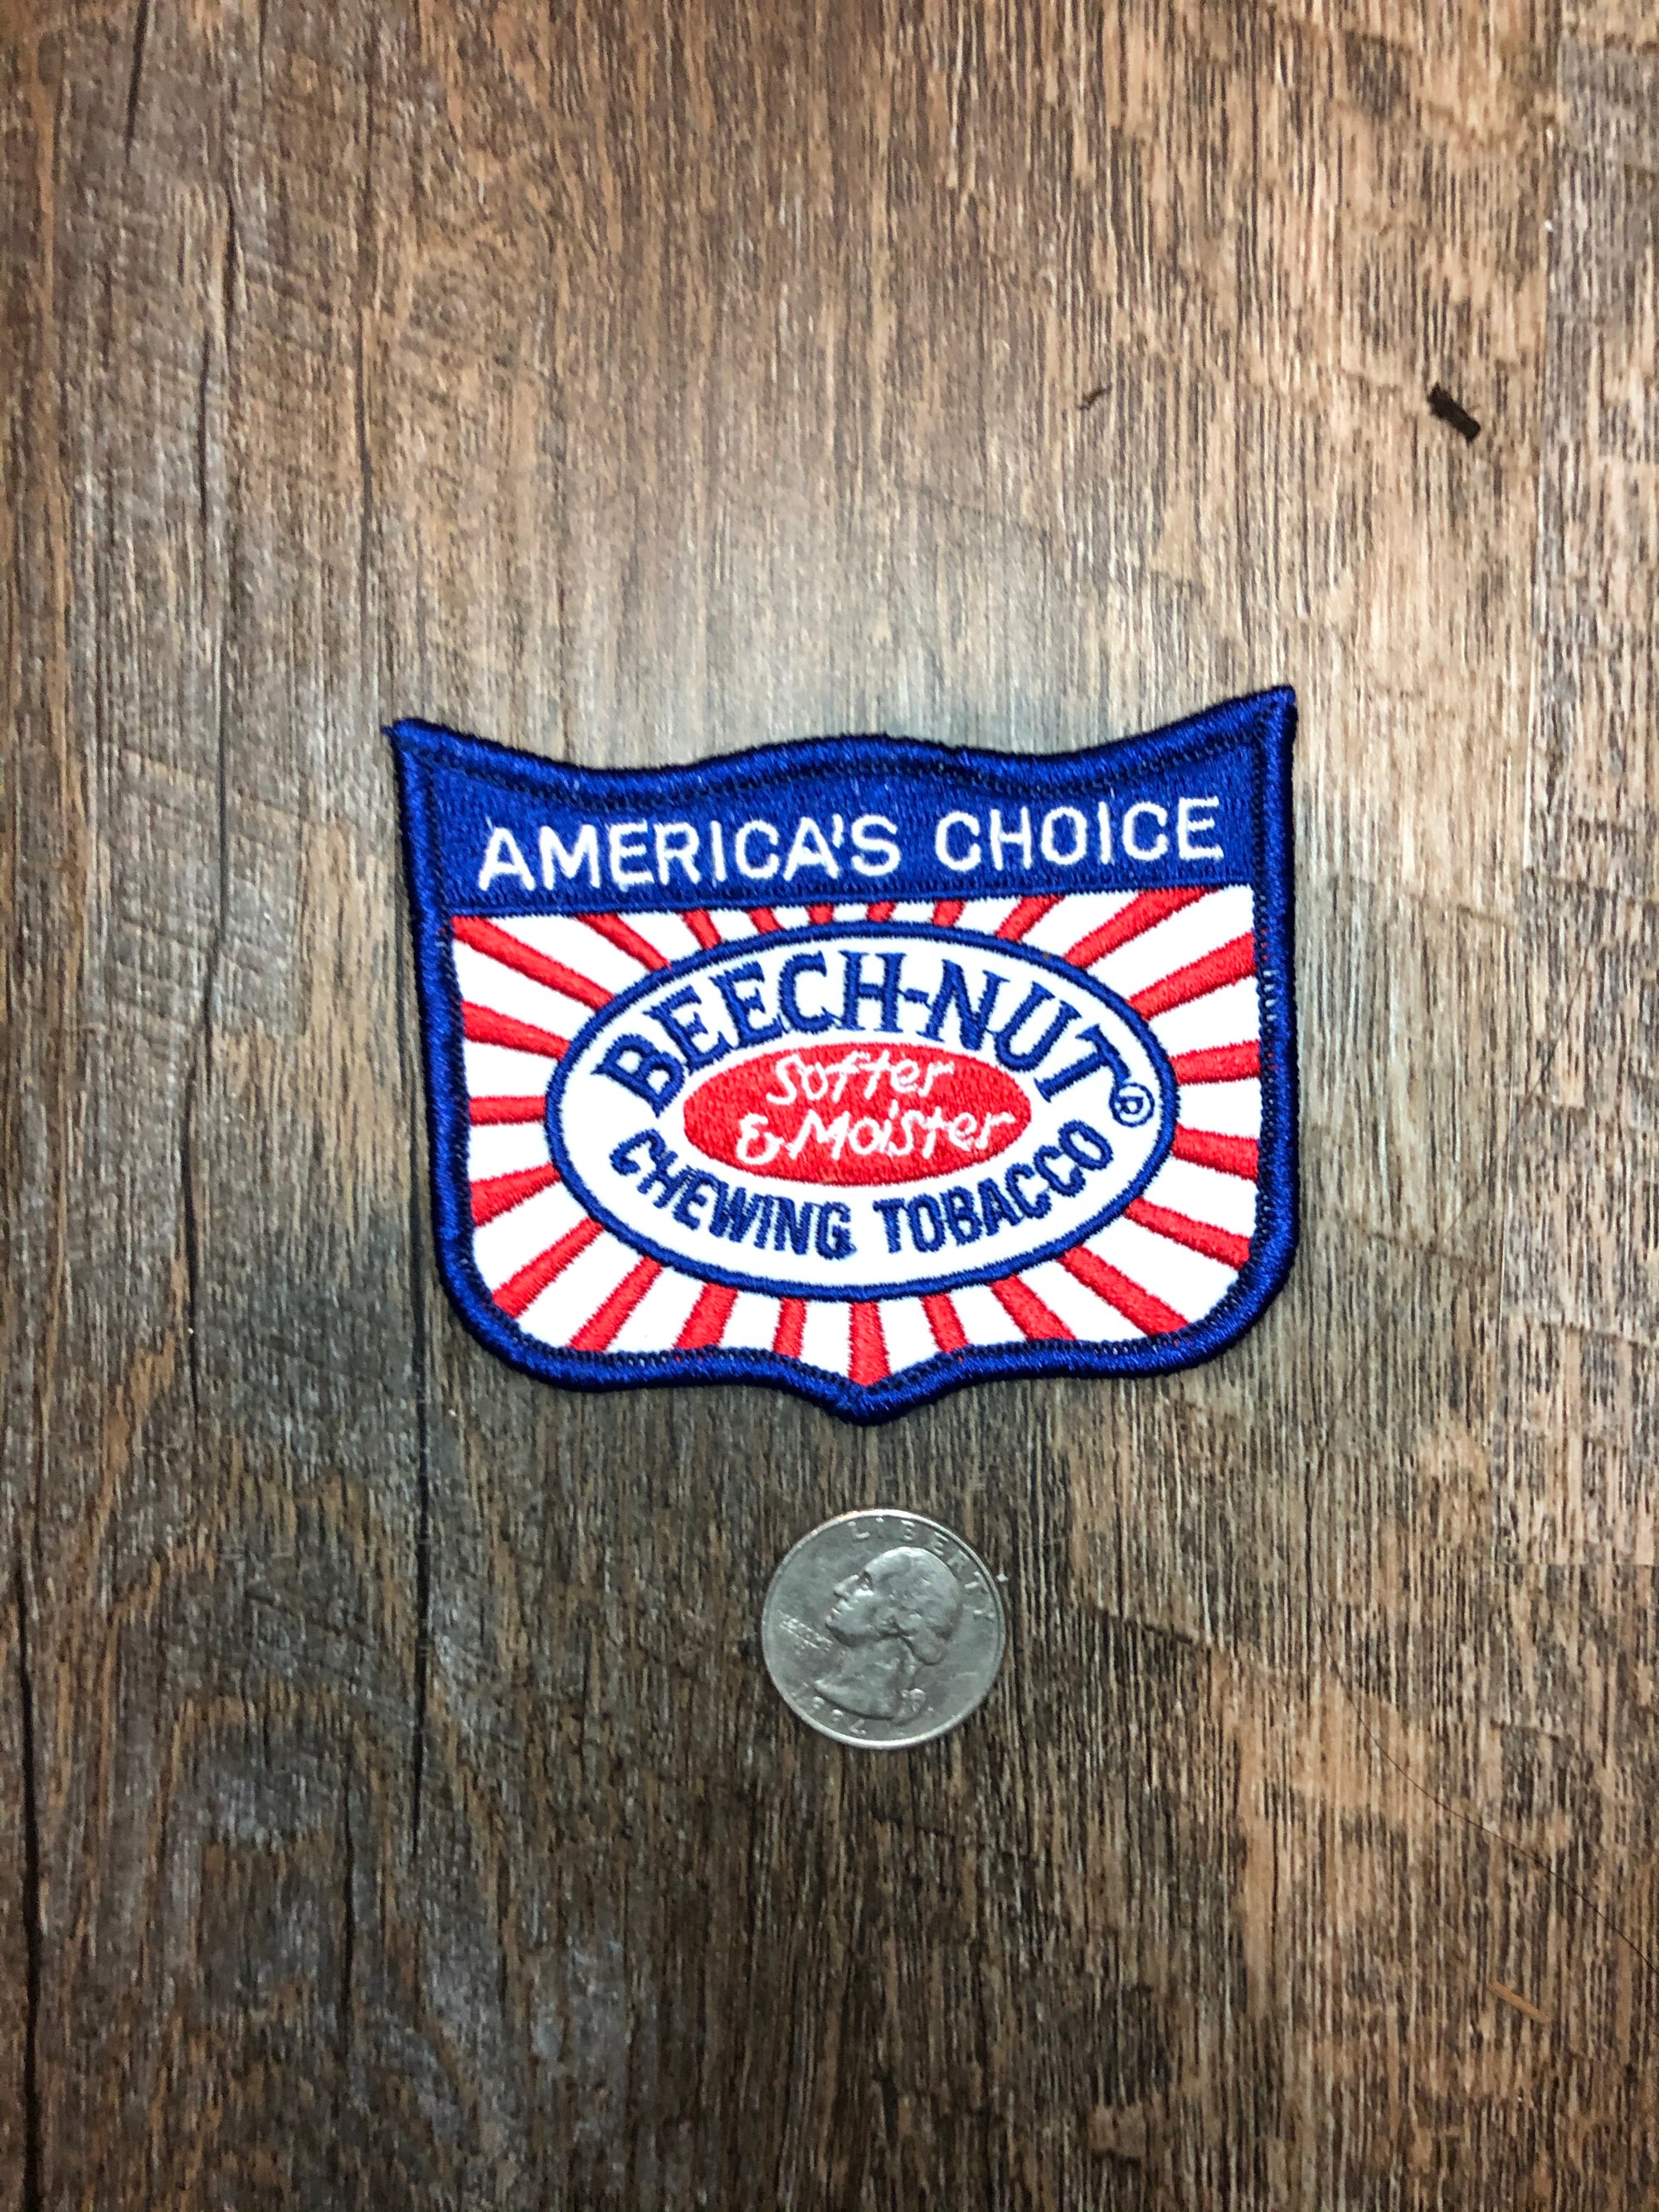 American Choice Beech-Nut Tobacco